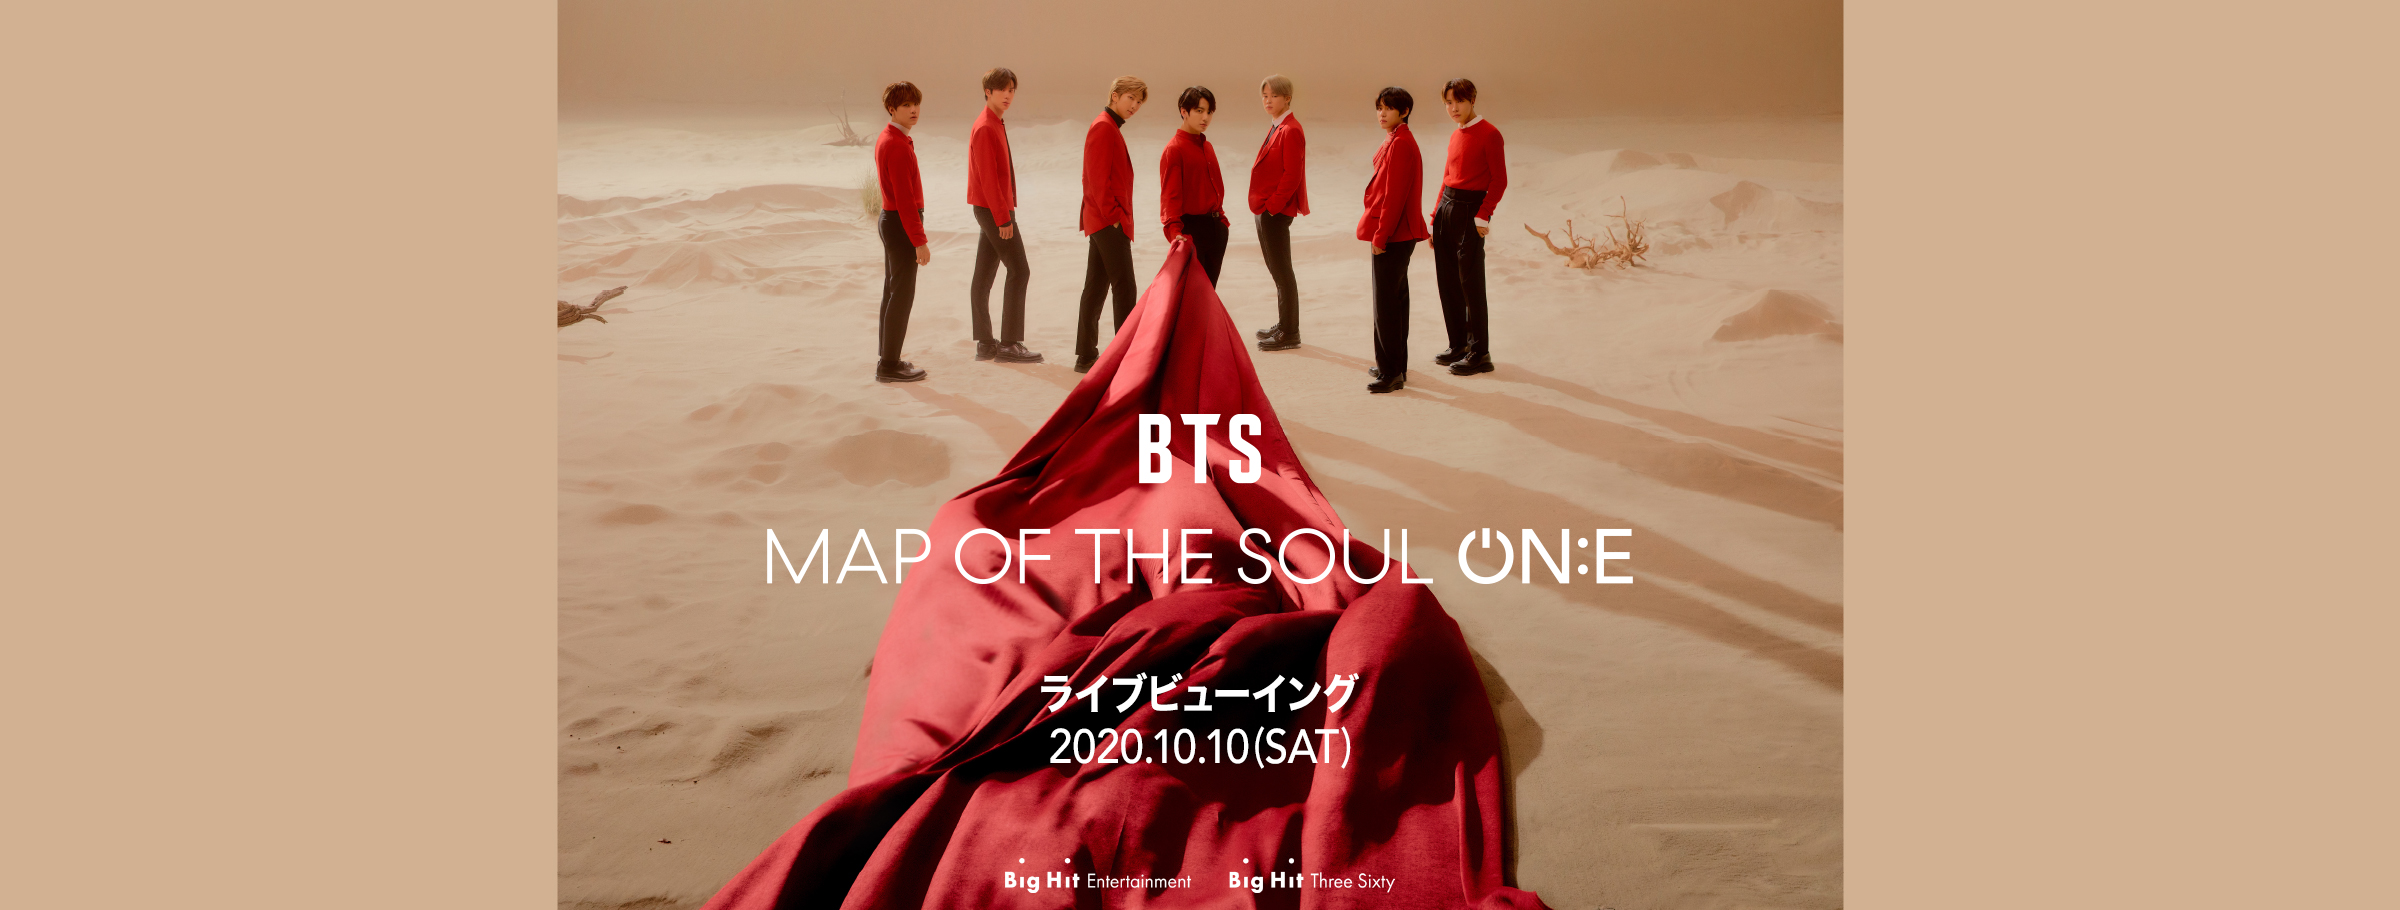 BTS MAP OF THE SOUL ON:E ライブビューイング